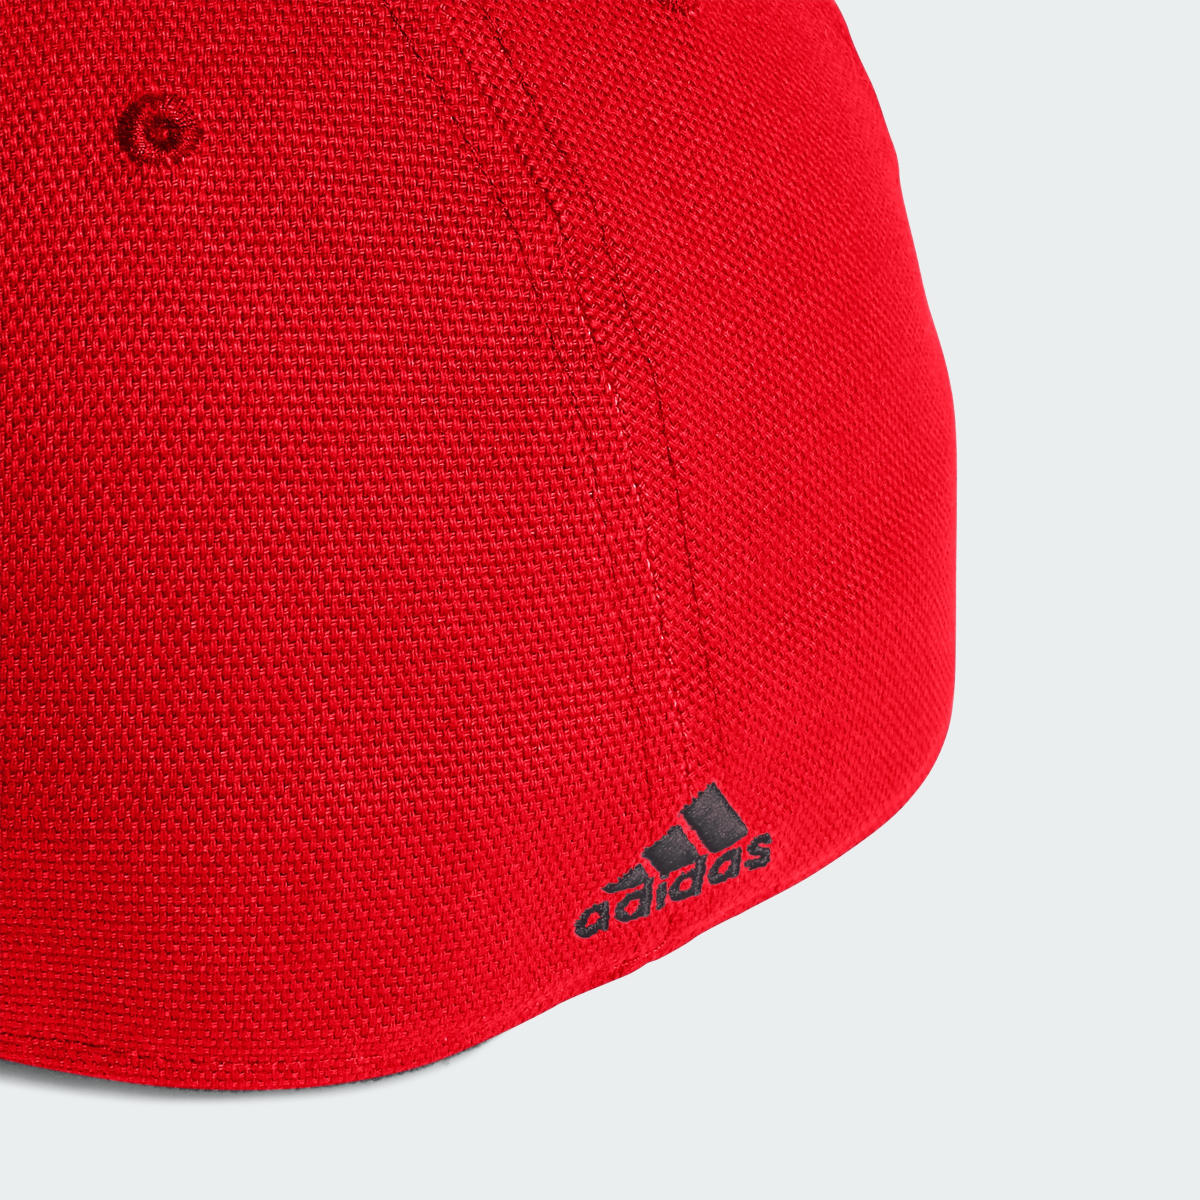 Adidas Producer Stretch Fit Hat. 6